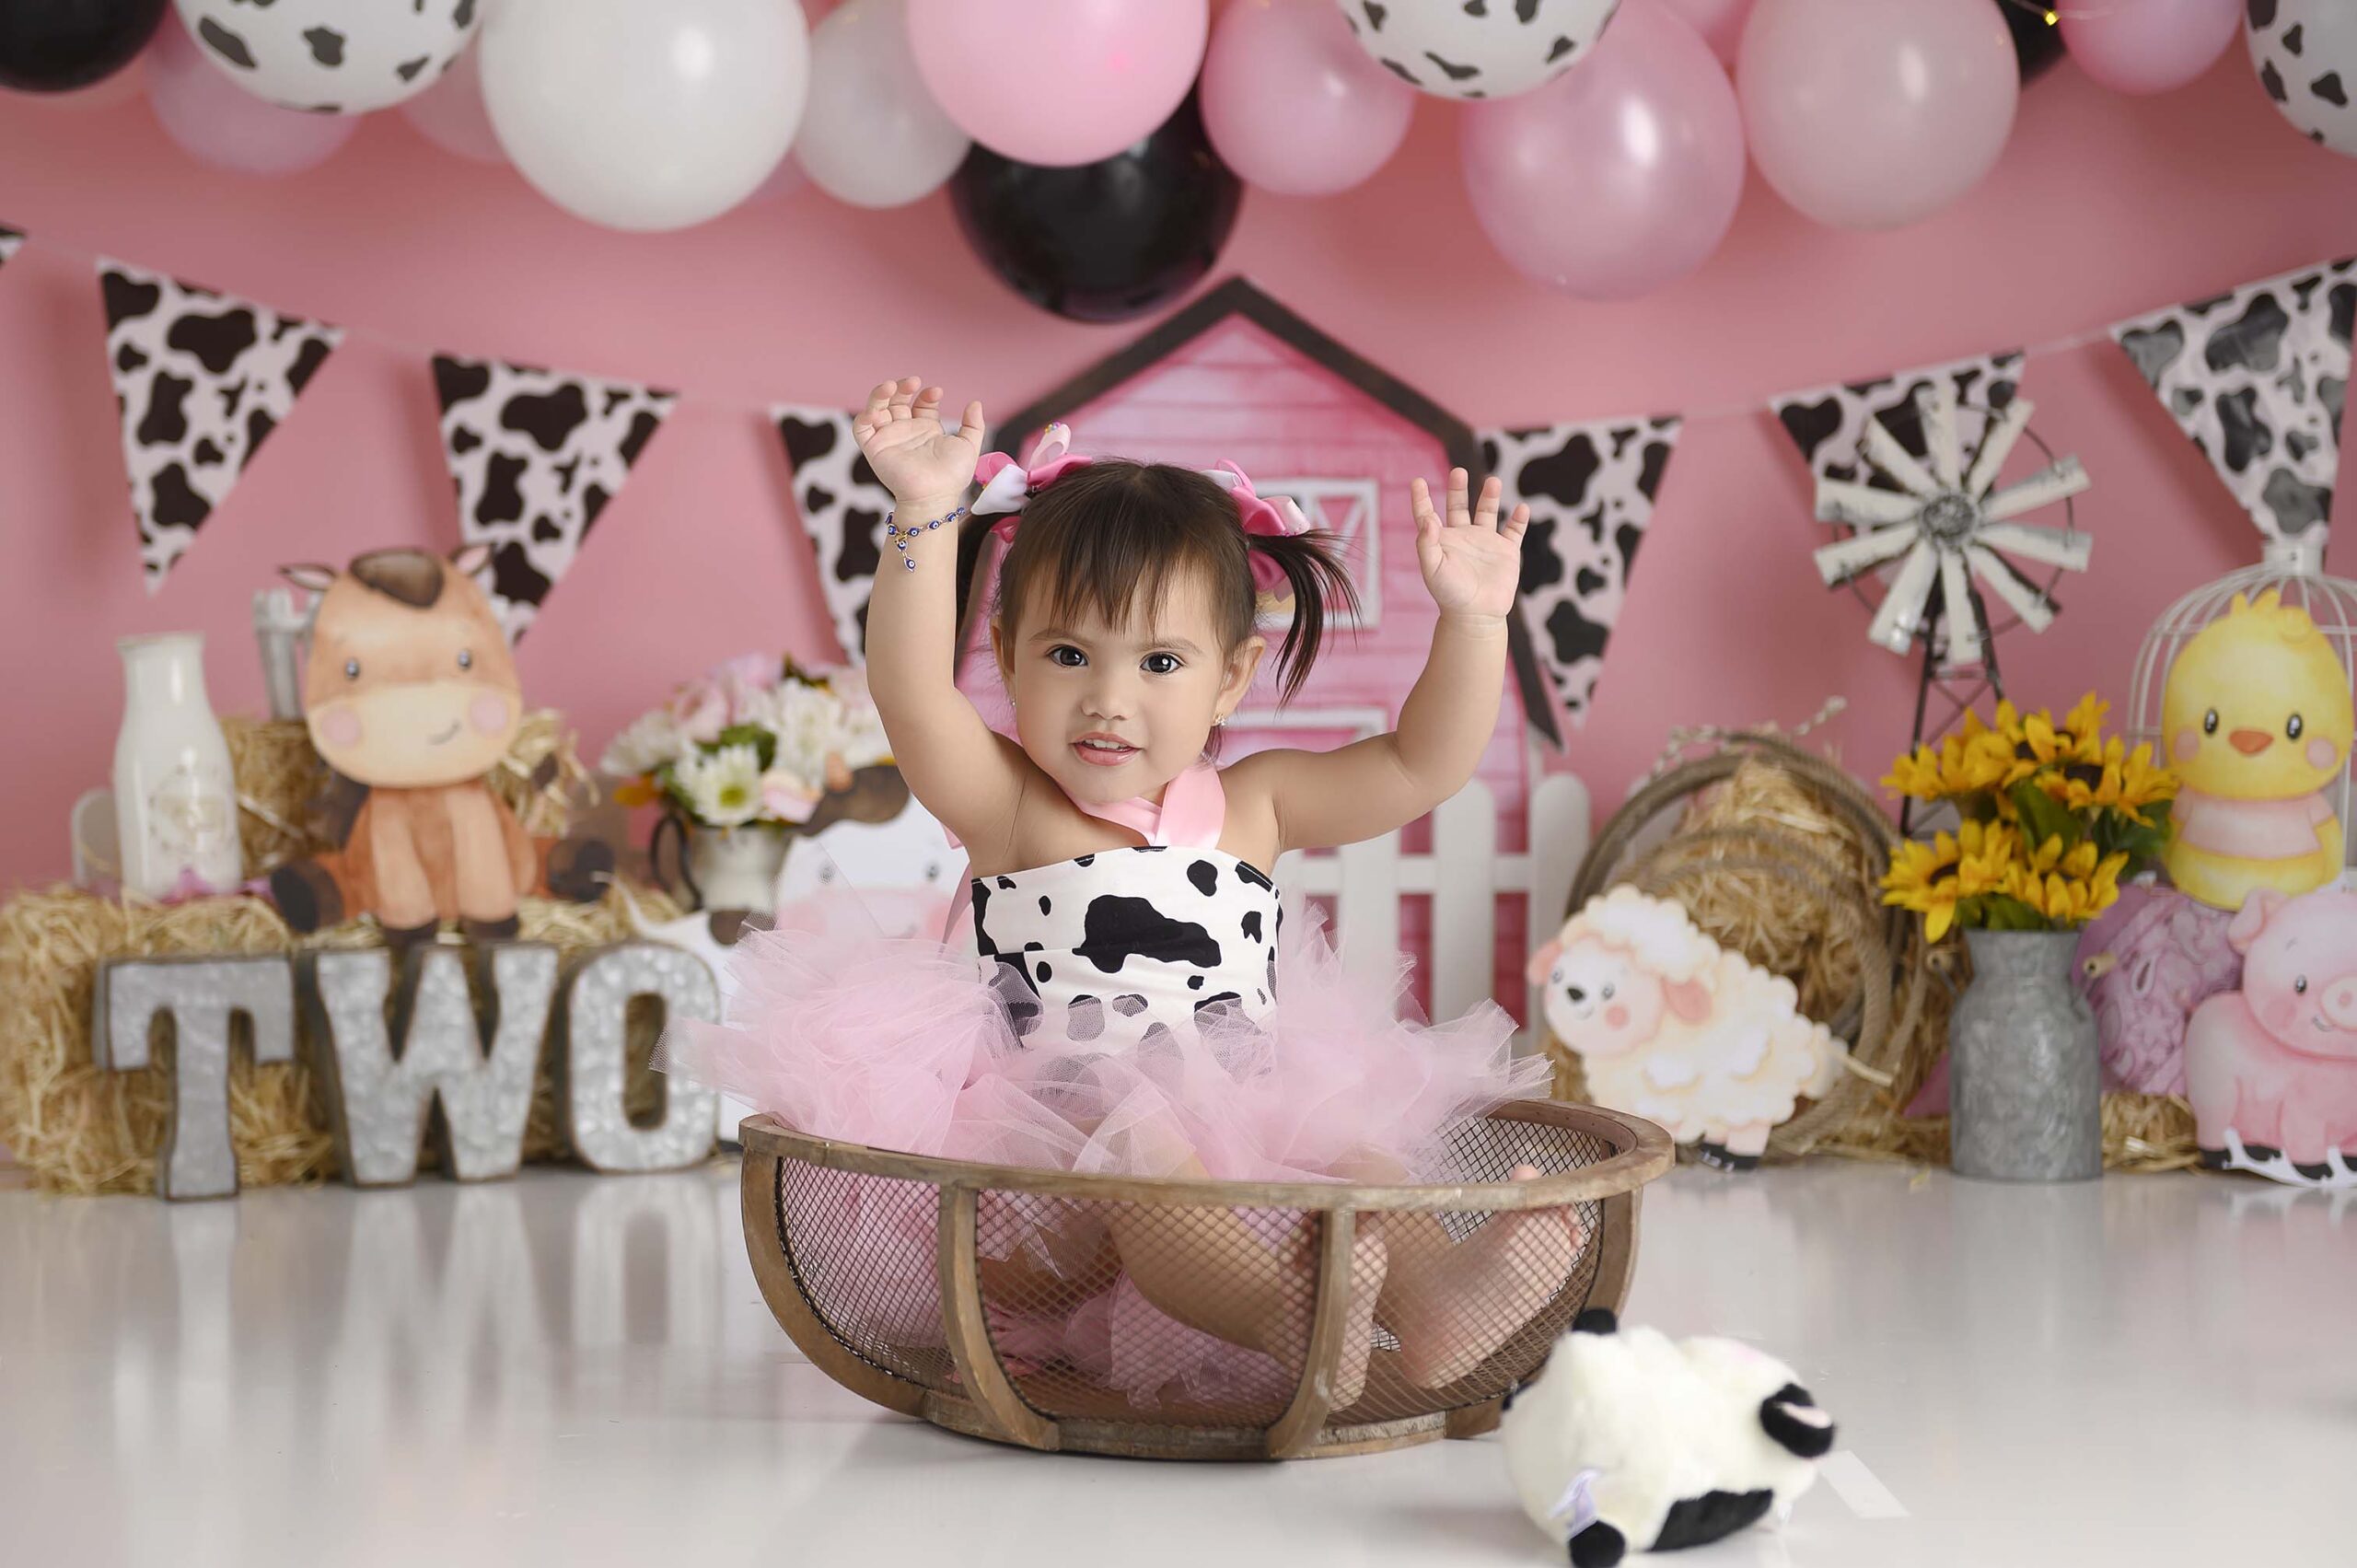 Flower-Mound-Lewisville-cake-smash-photographer-second-birthday-milestone-pink-barn-farm-animals-country-girl